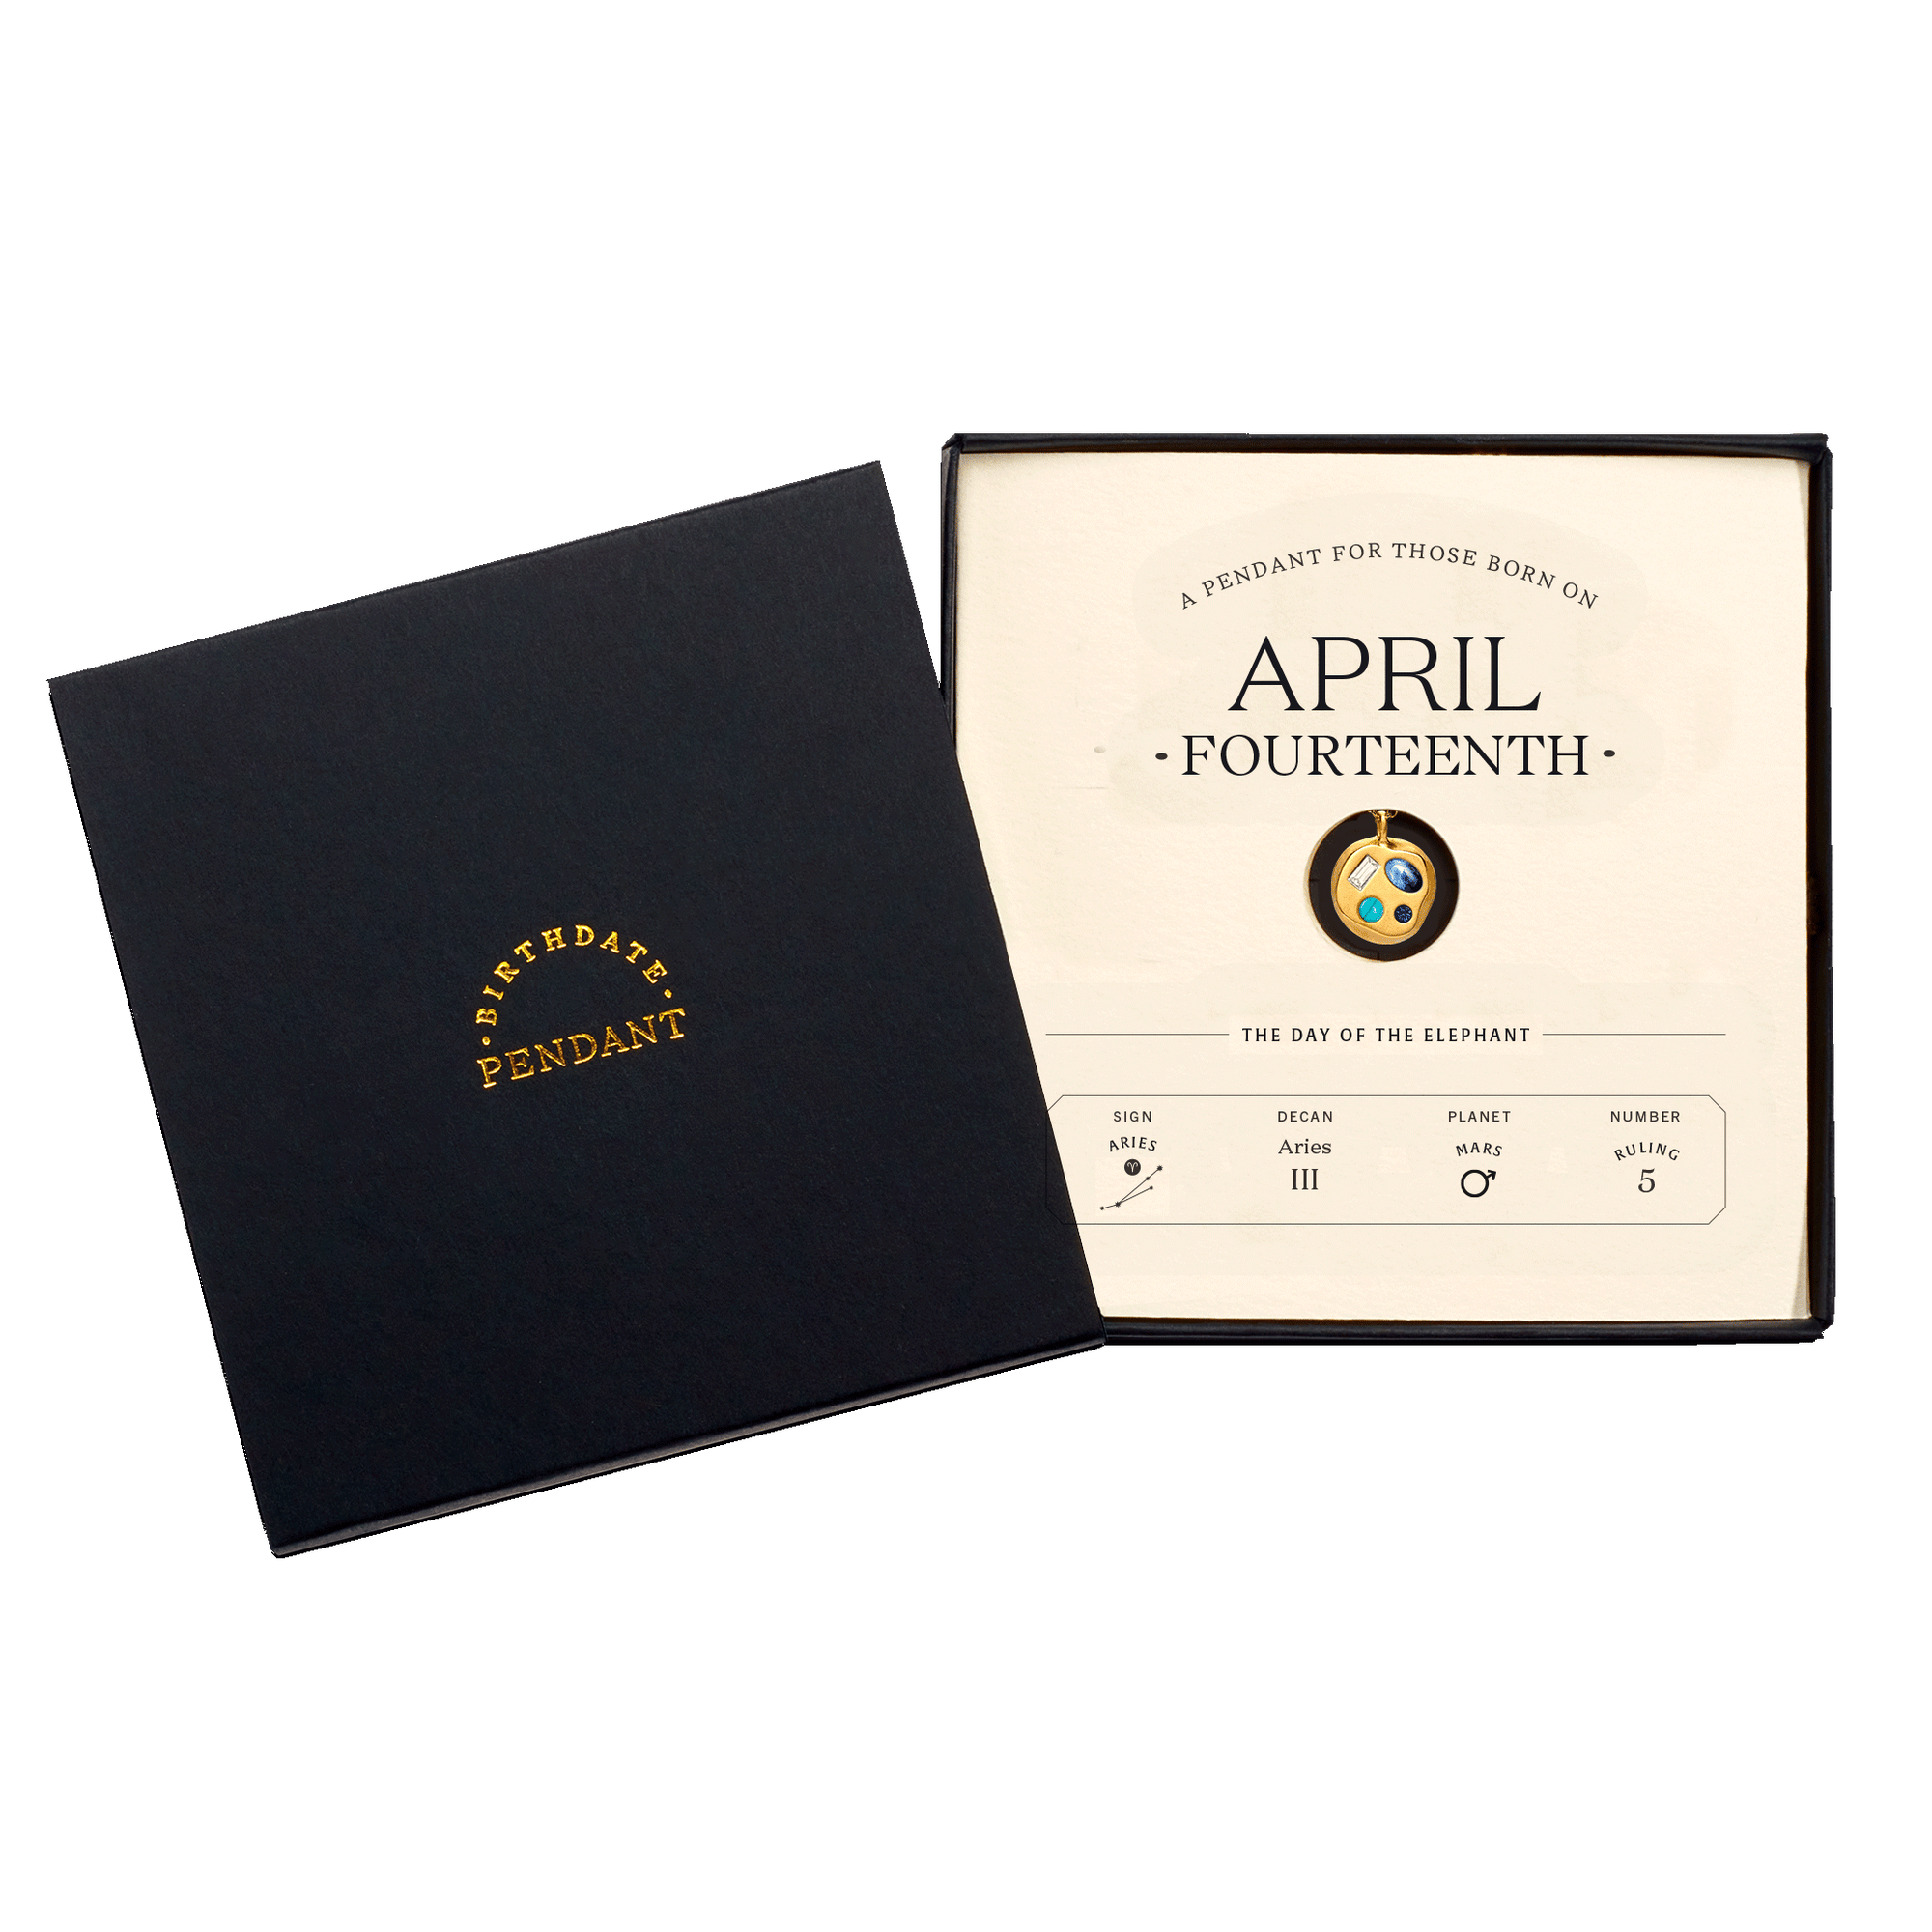 The April Fourteenth Pendant inside its box